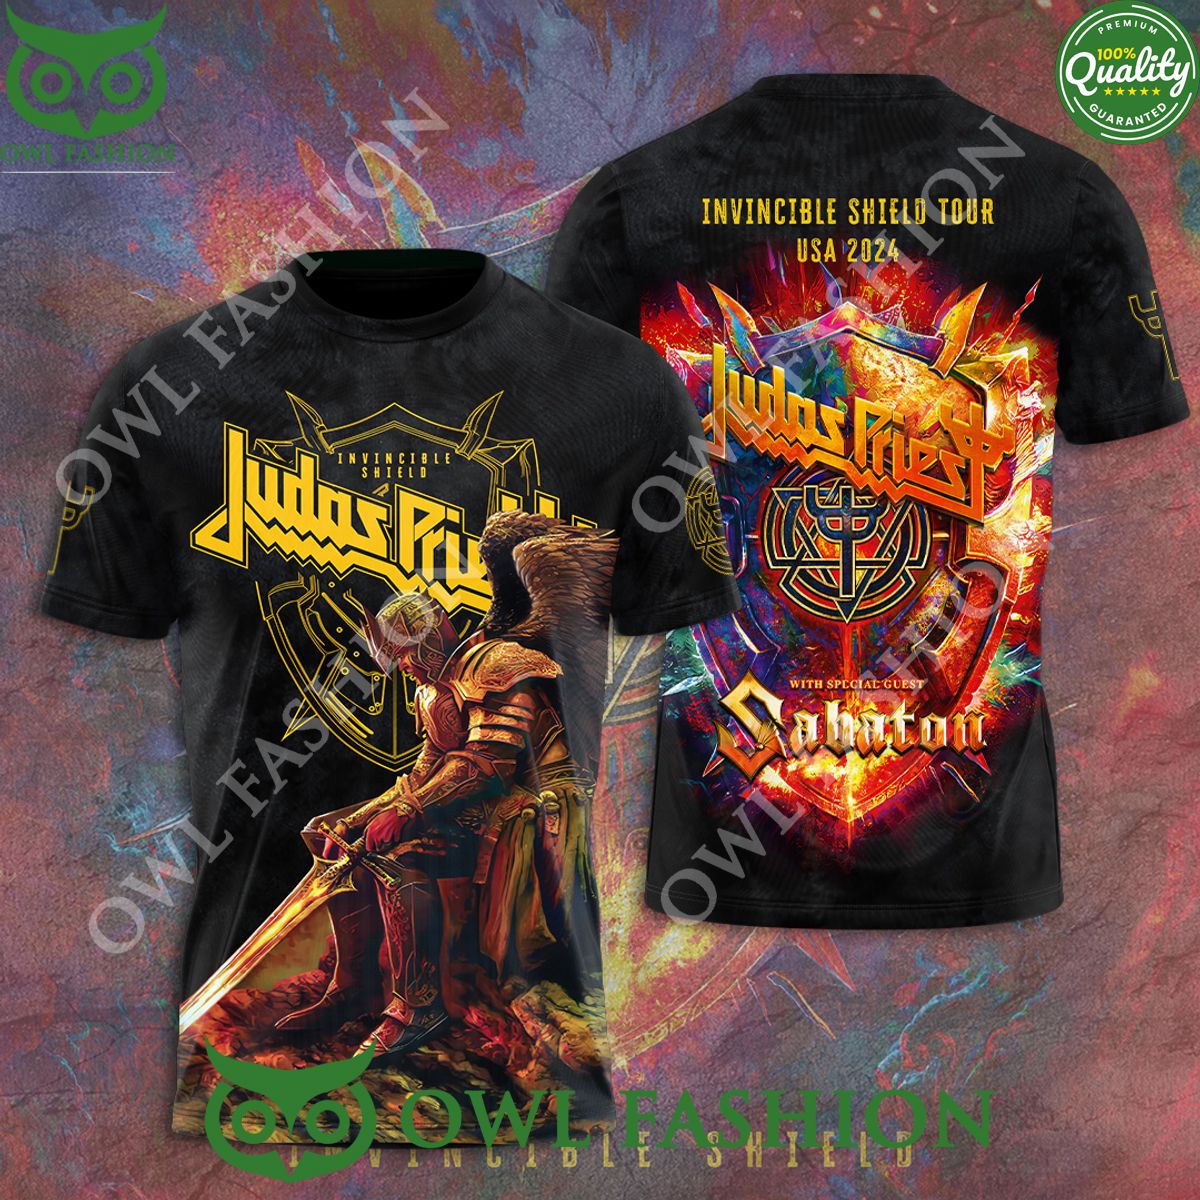 Judas Priest Sabaton Invincible Shield Tour USA 2024 3D t shirt